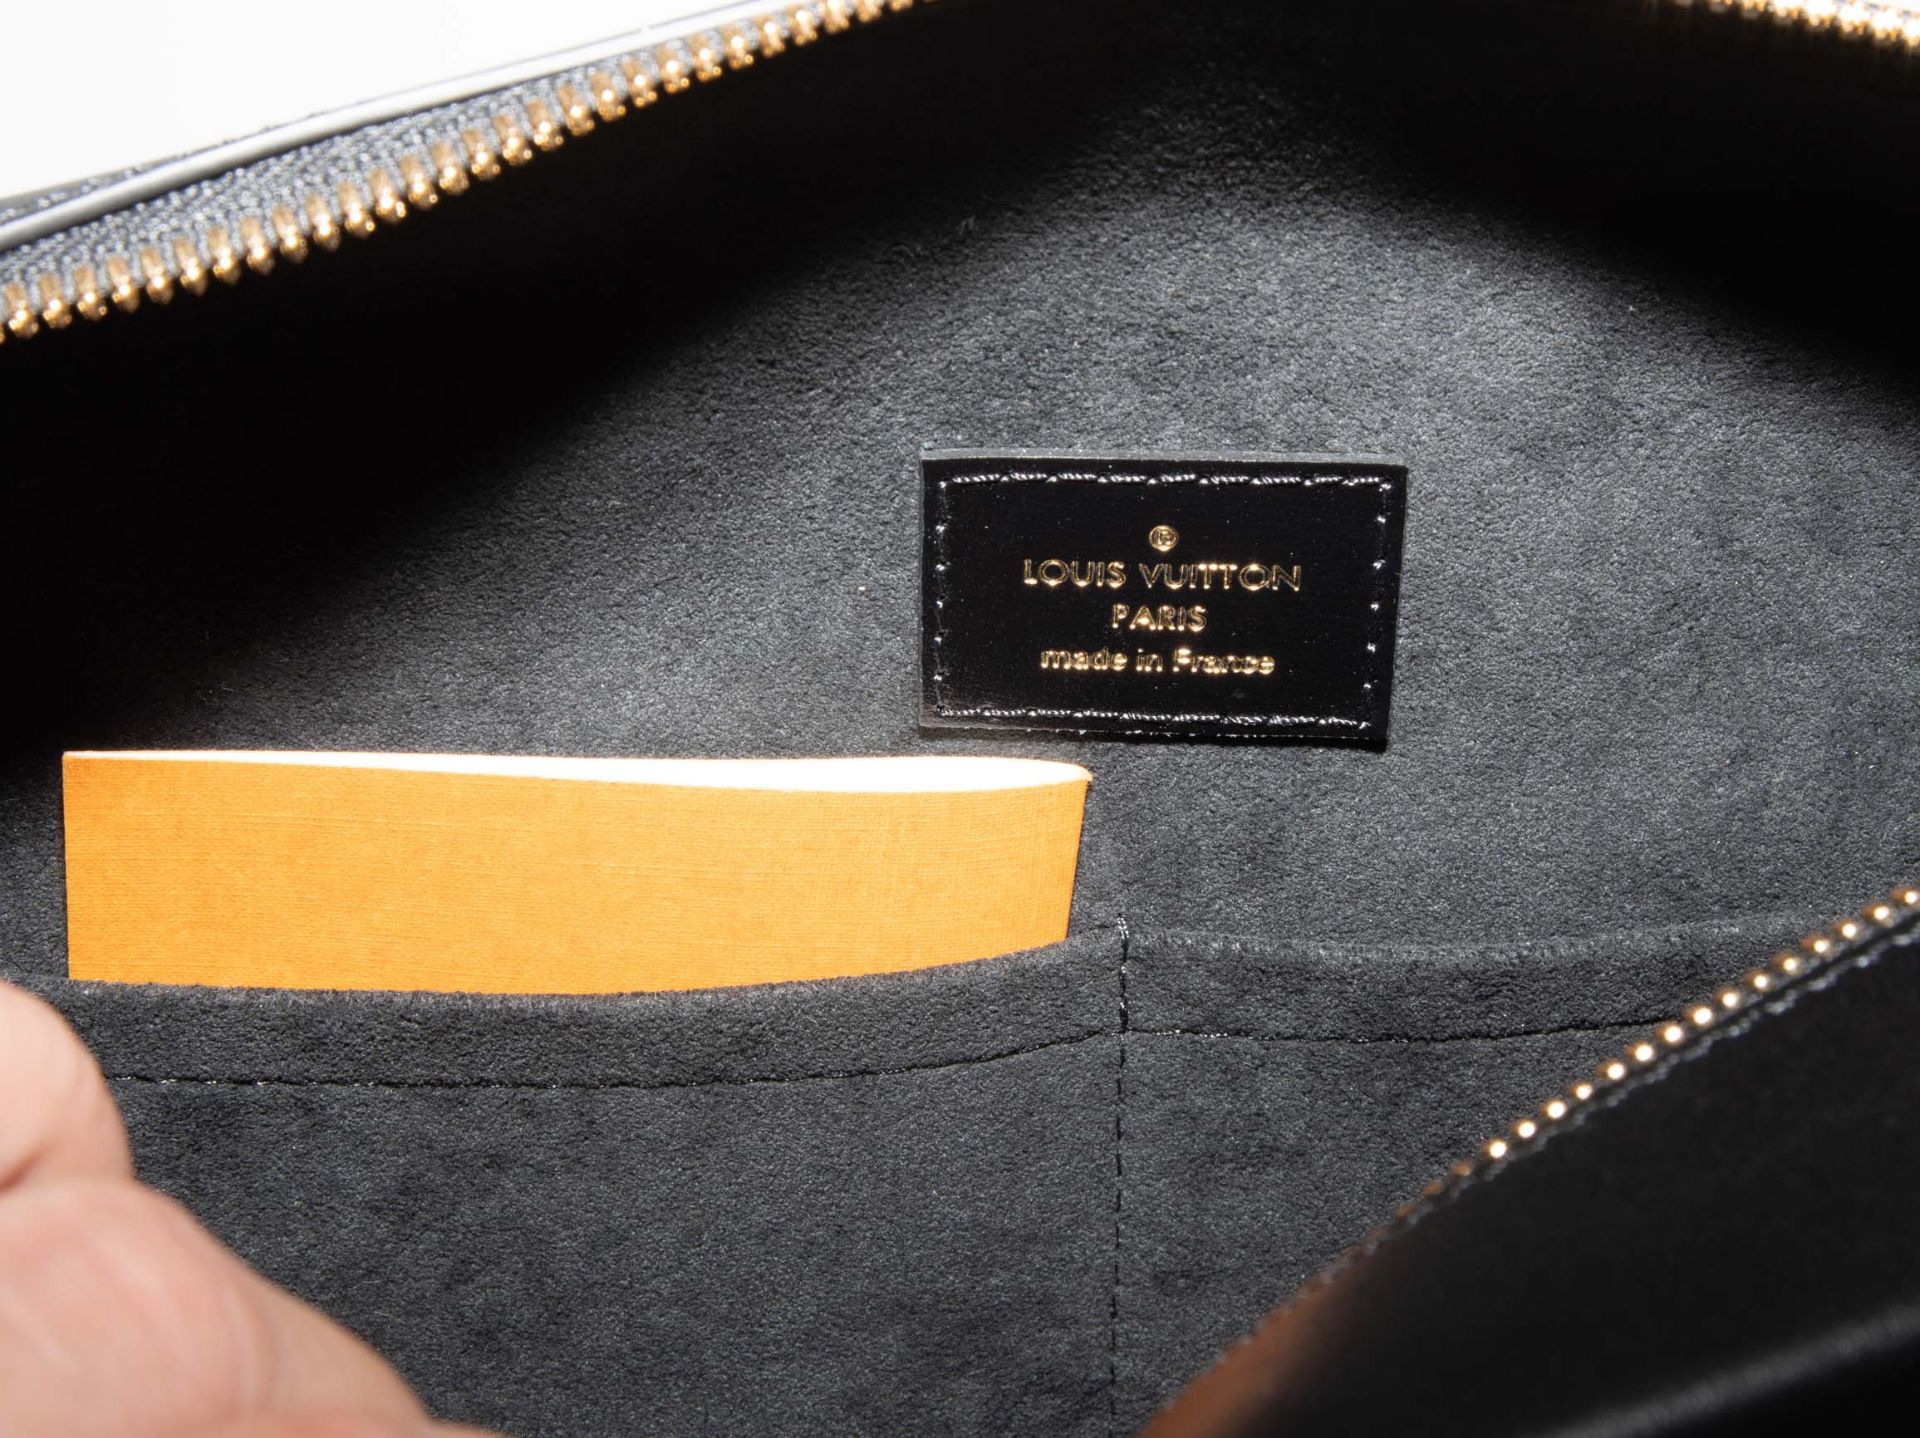 Louis Vuitton, Handtasche "City Malle" - Image 11 of 14